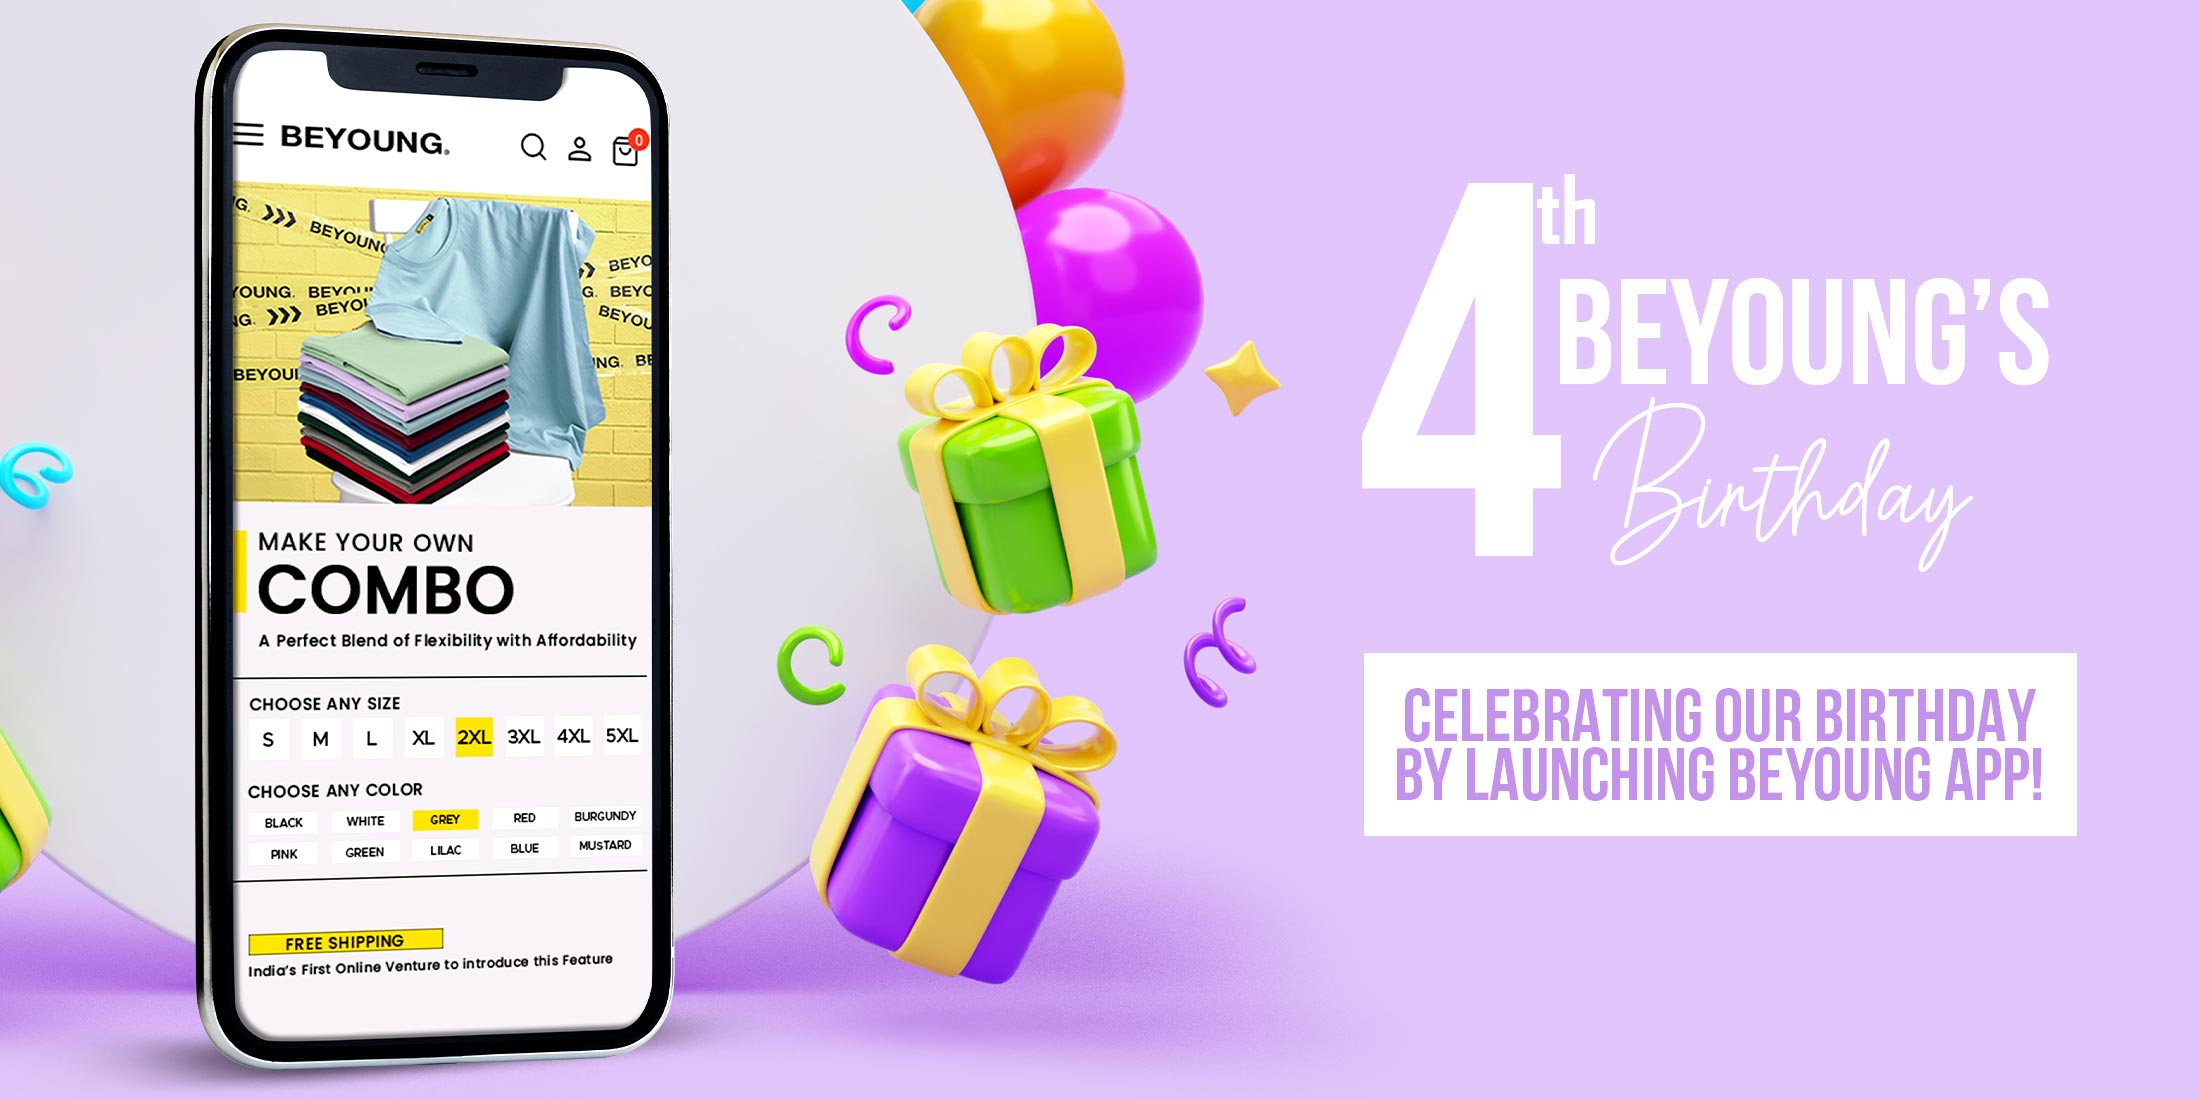 Beyoung’s 4th Birthday: Celebrating  …